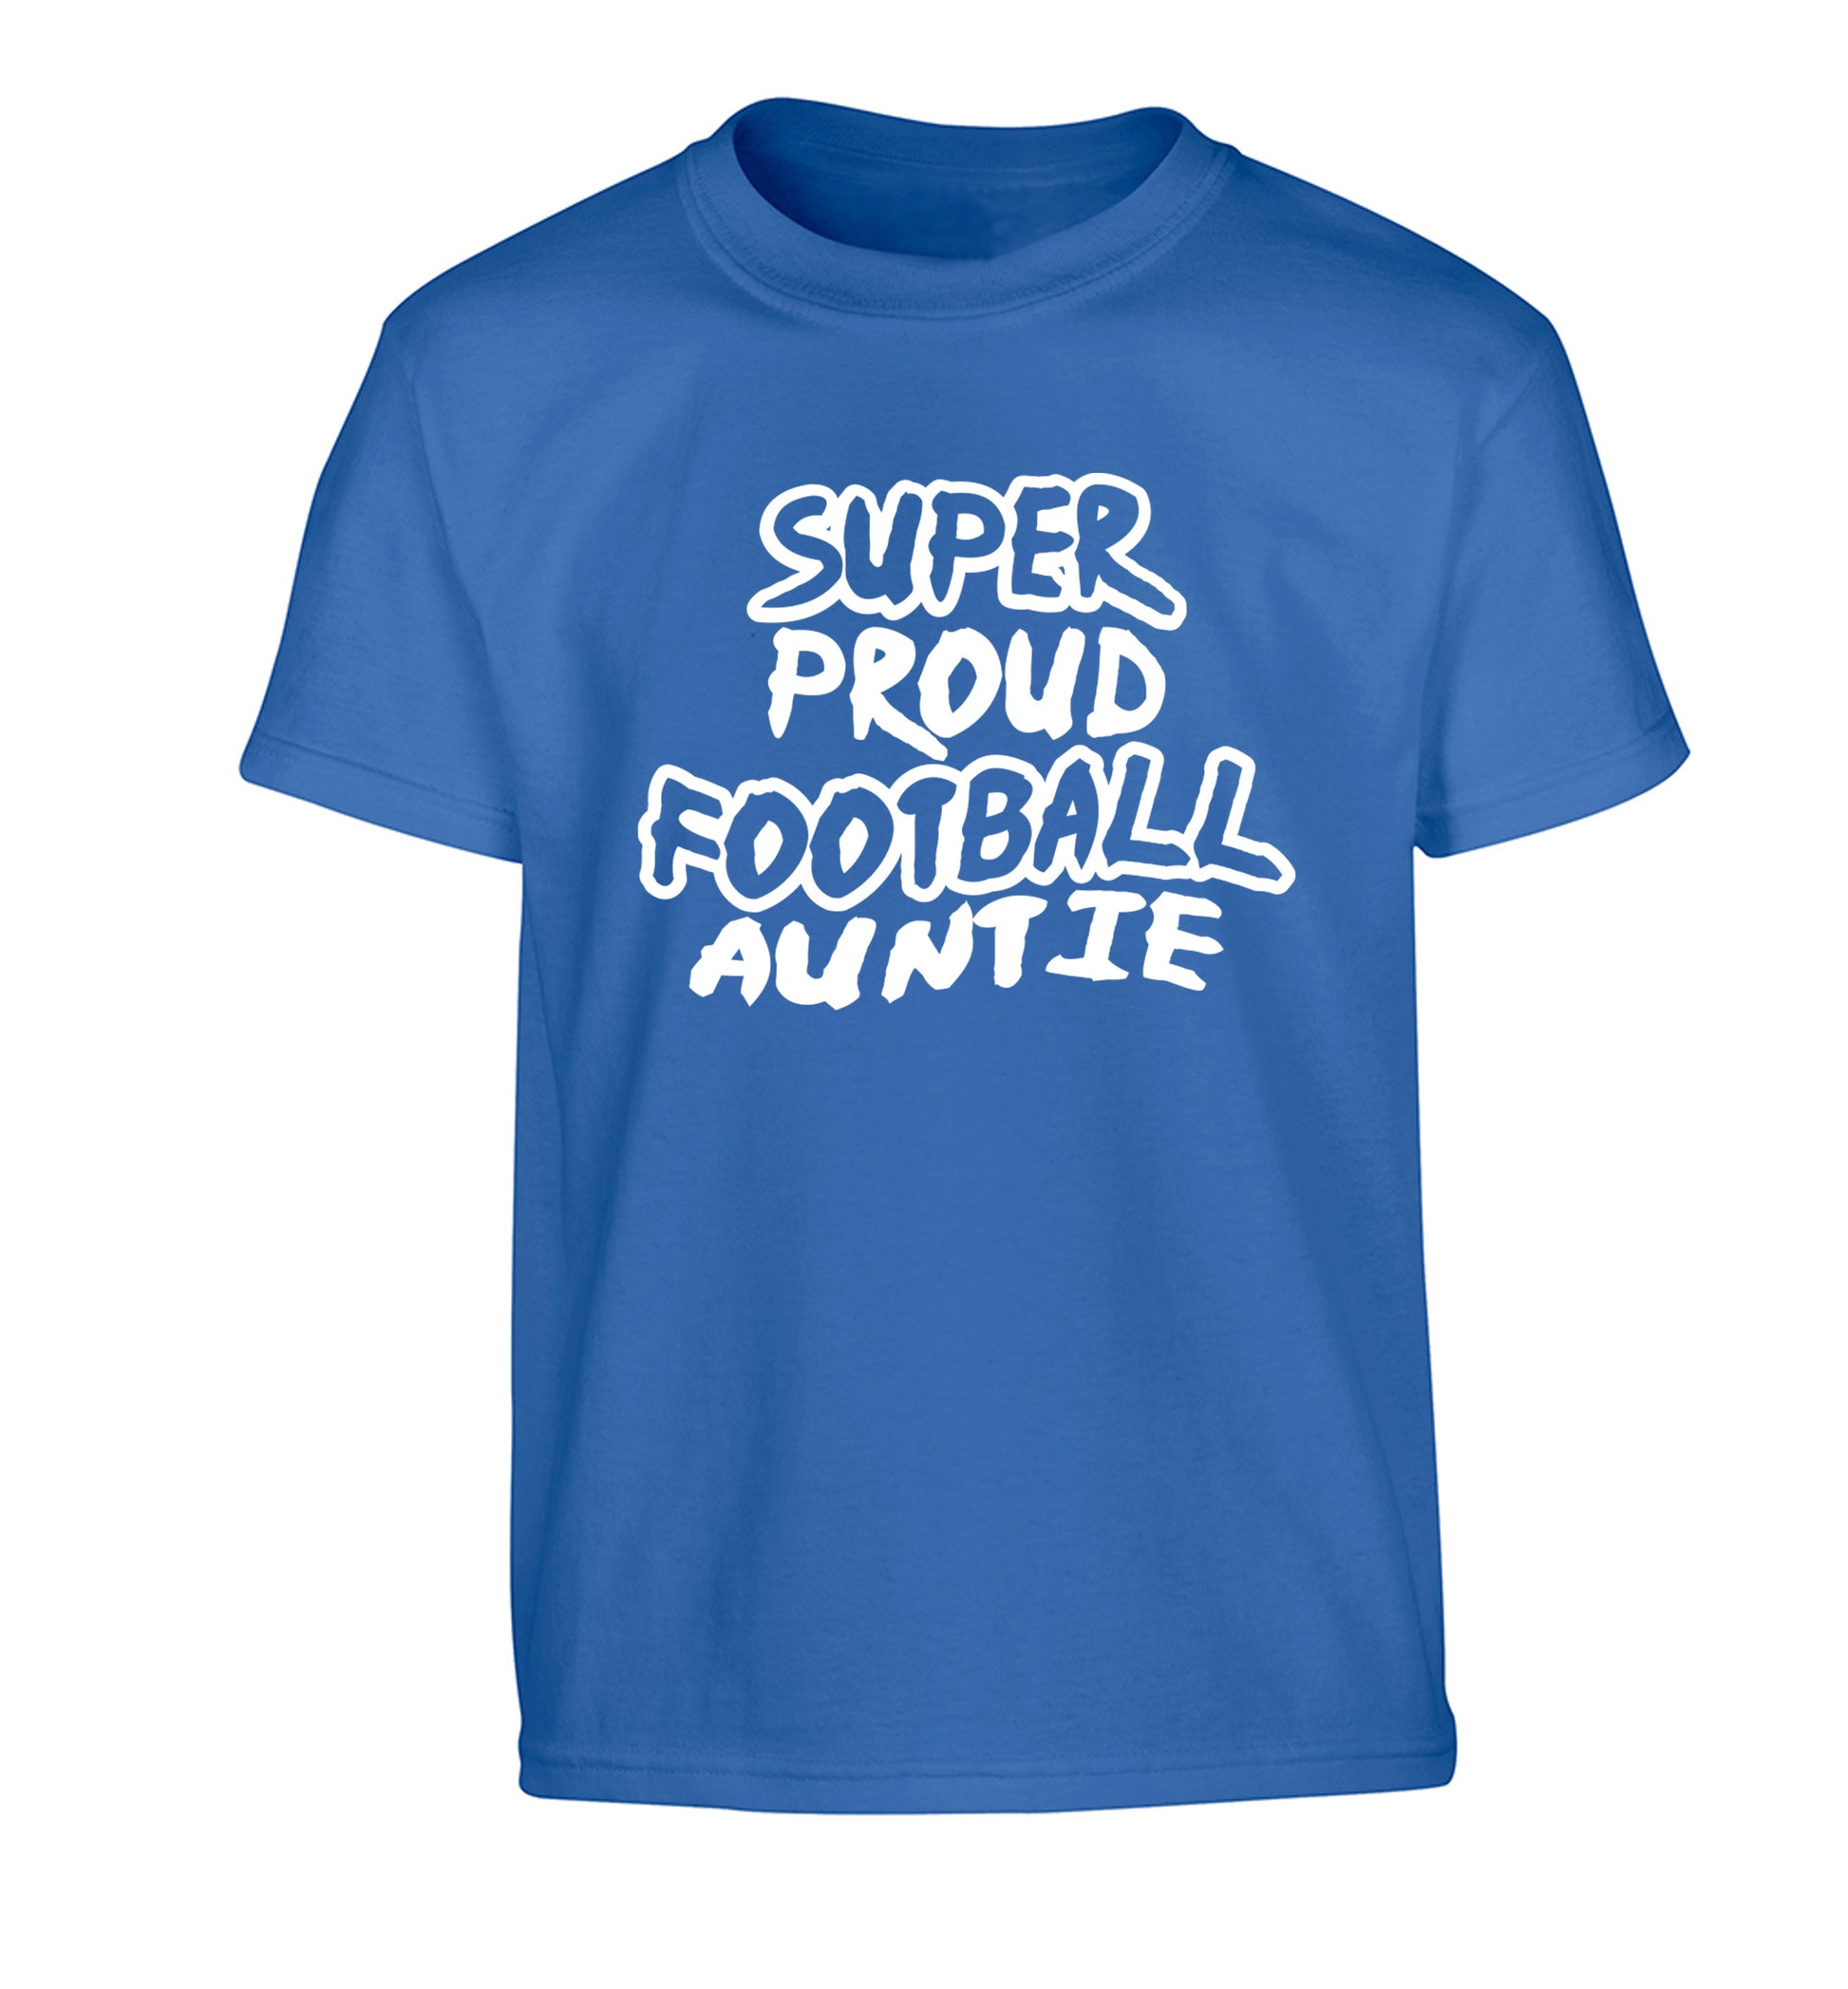 Super proud football auntie Children's blue Tshirt 12-14 Years